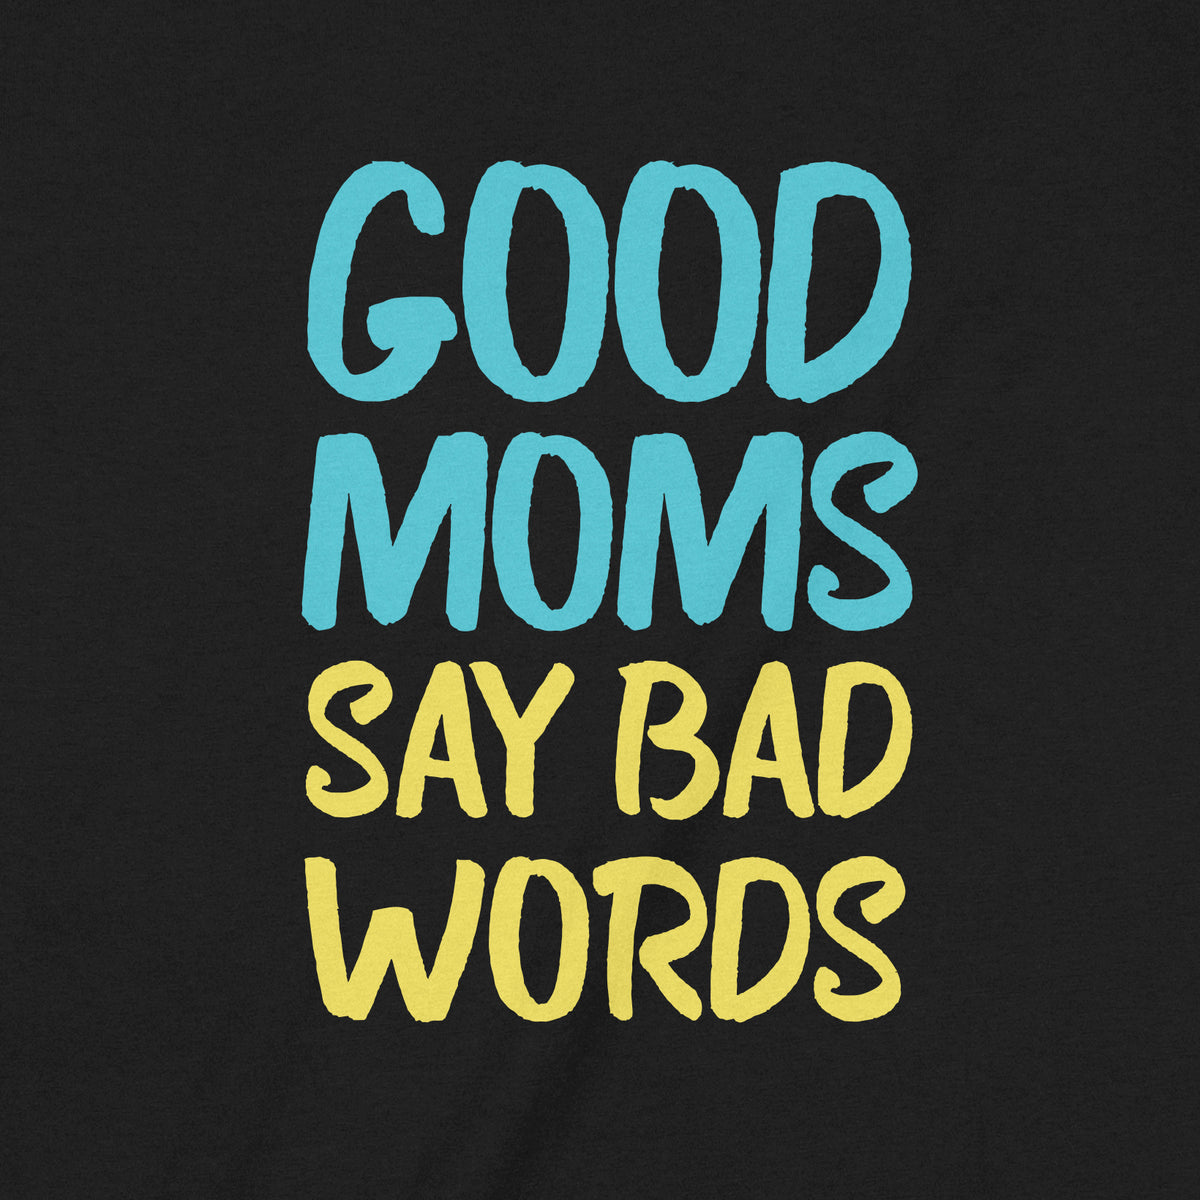 "Good Moms" Premium Midweight Ringspun Cotton T-Shirt - Womens Fits